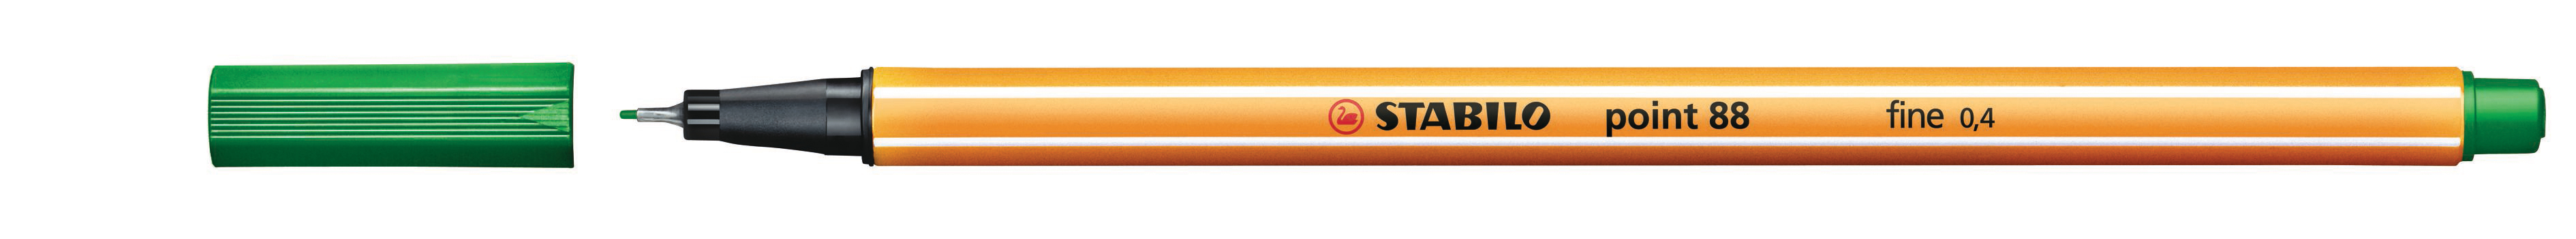 STABILO Stylos fibre point 88 0.4mm 88/36 vert vert